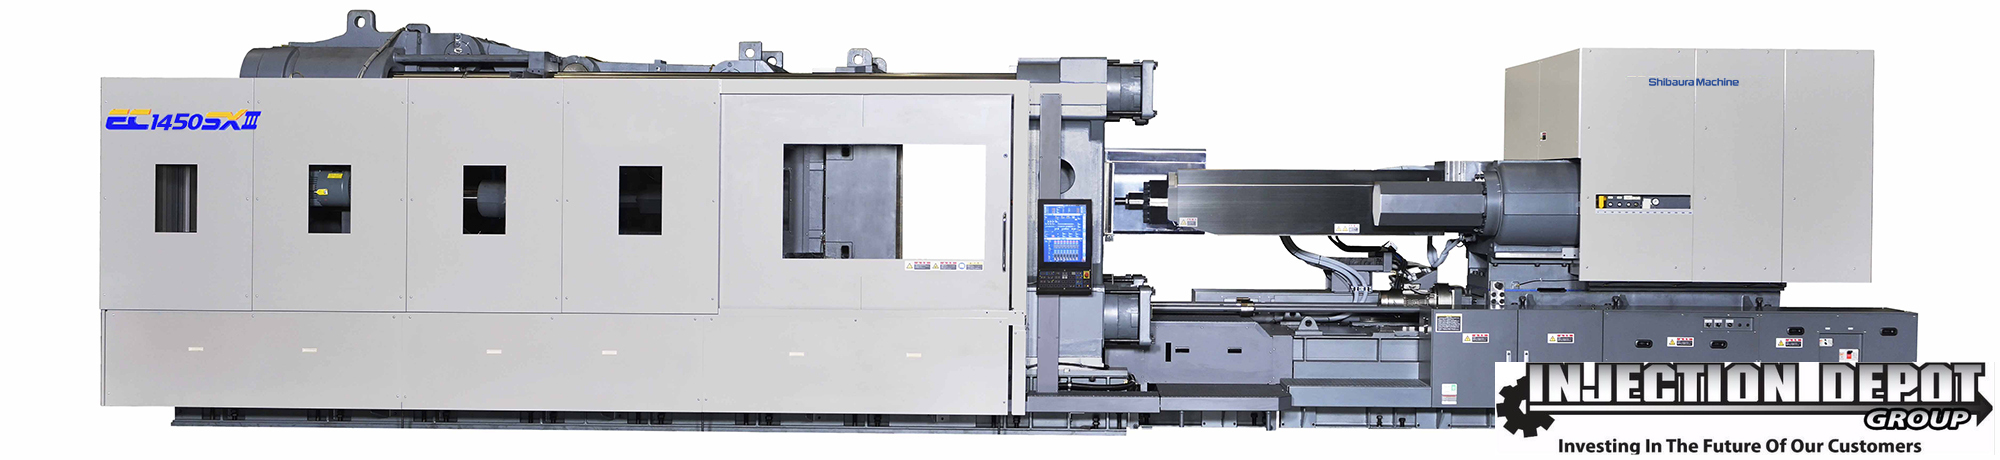 Shibaura Machine EC1450SXIIIV70-i155 A Horizontal Injection Moulding Machines | INJECTION DEPOT GROUP